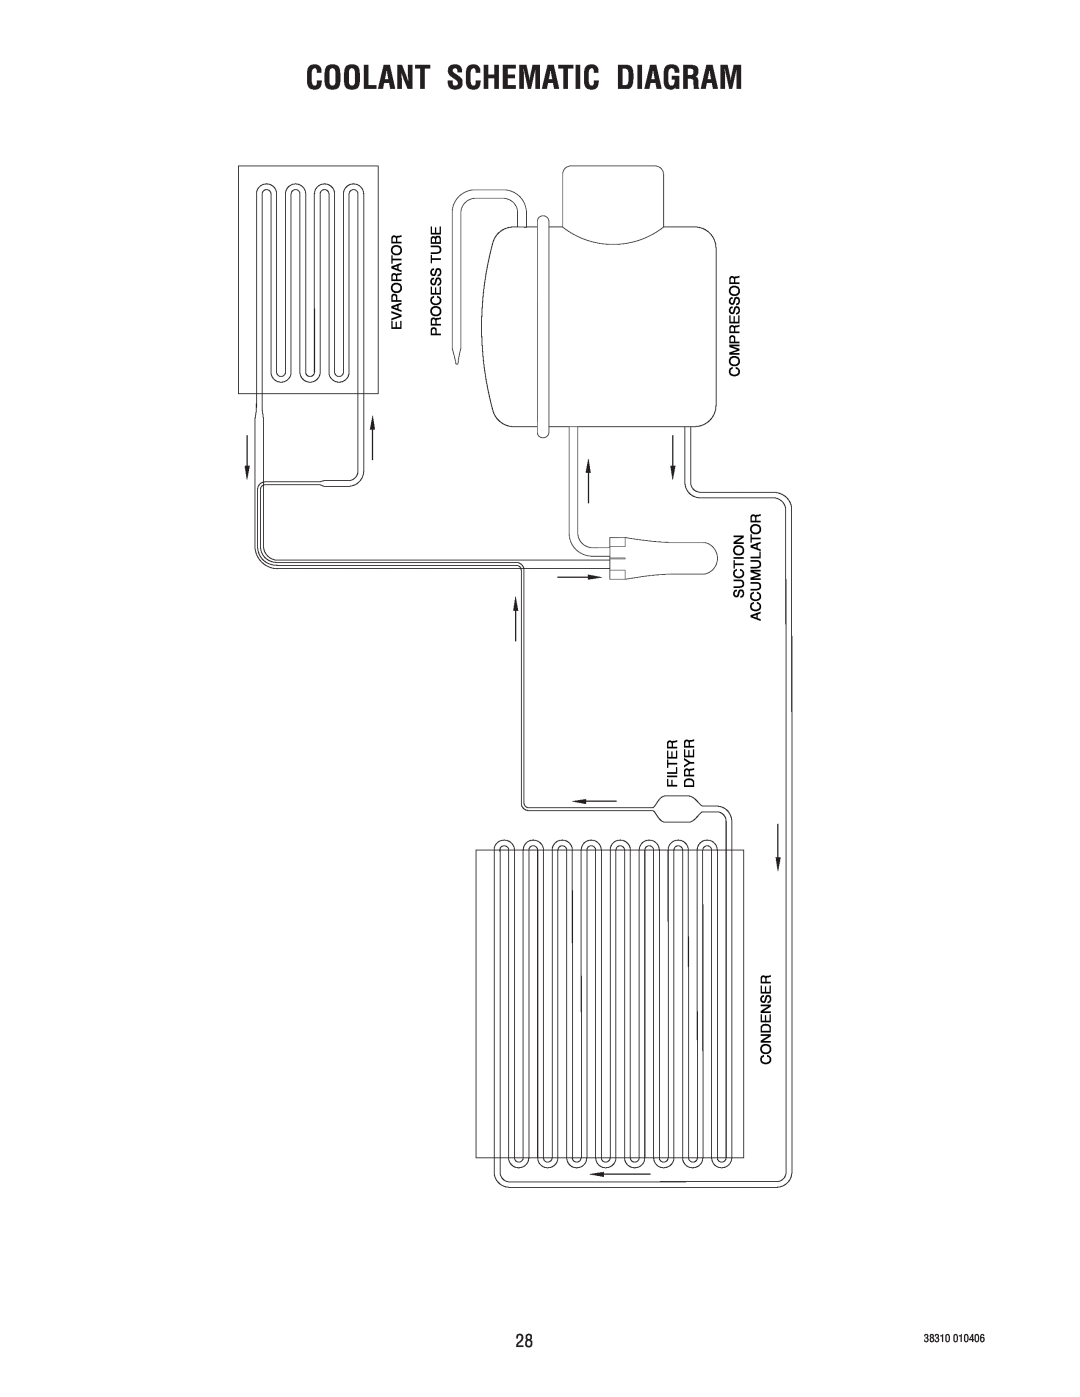 Bunn JDF-2N Coolant Schematic Diagram, Evaporator, Process Tube, Compressor, Accumulator Suction Dryer, Condenser, 38310 